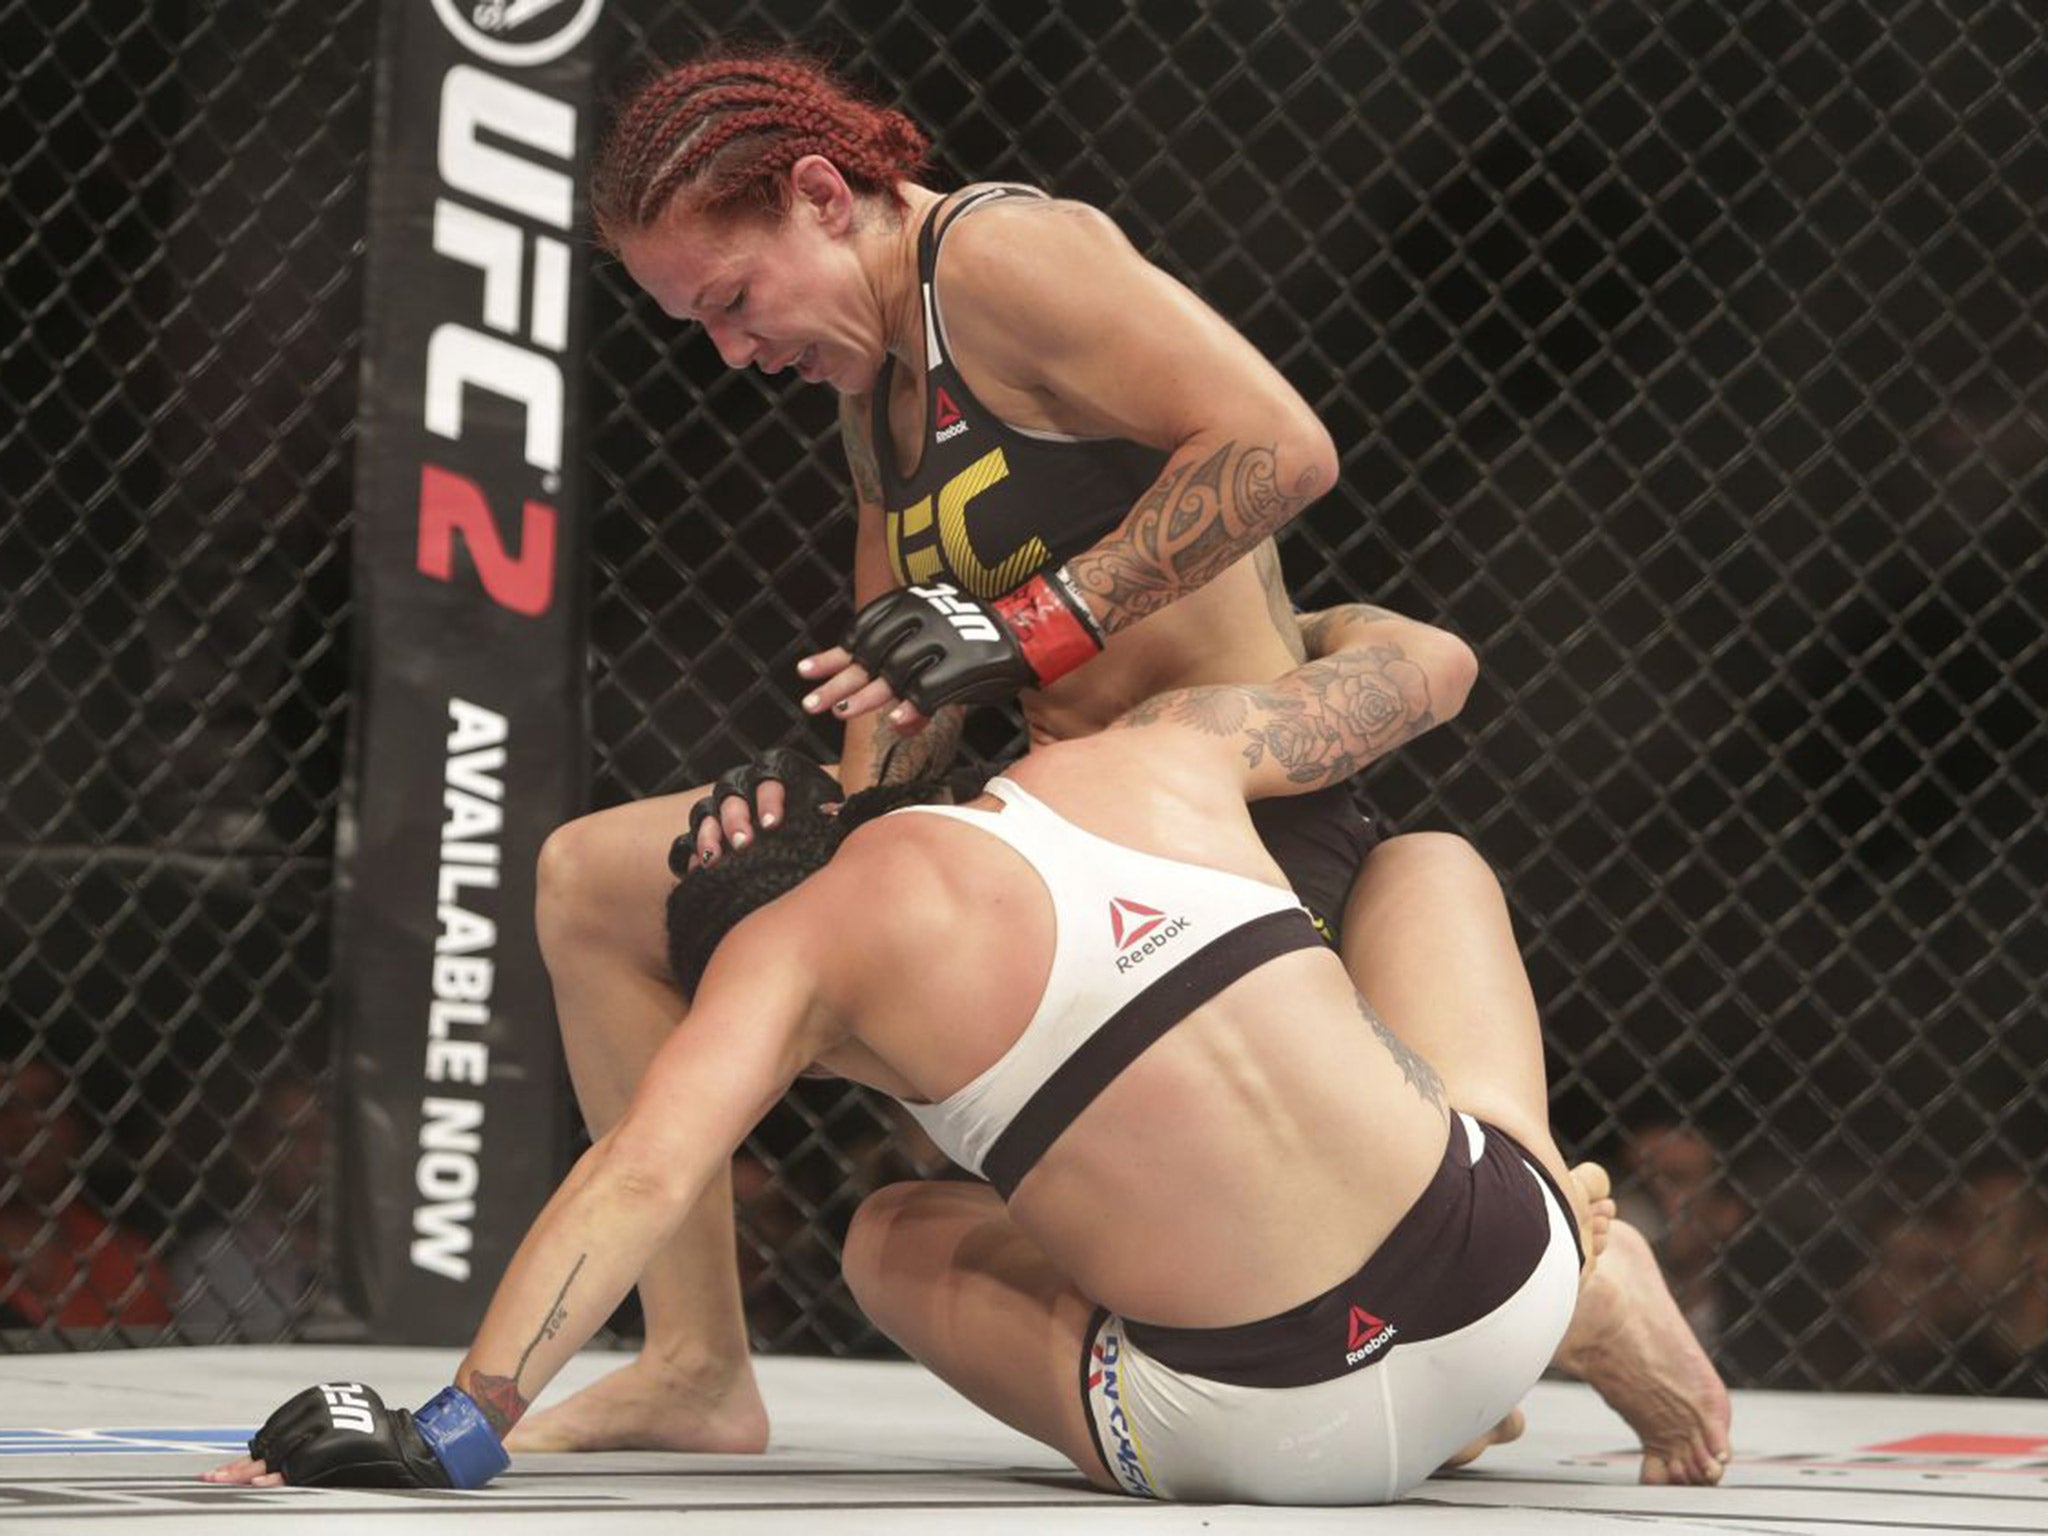 Brazil's Cristiane Justino works against Sweden's Lina Lansberg during UFC Fight Night Brasilia